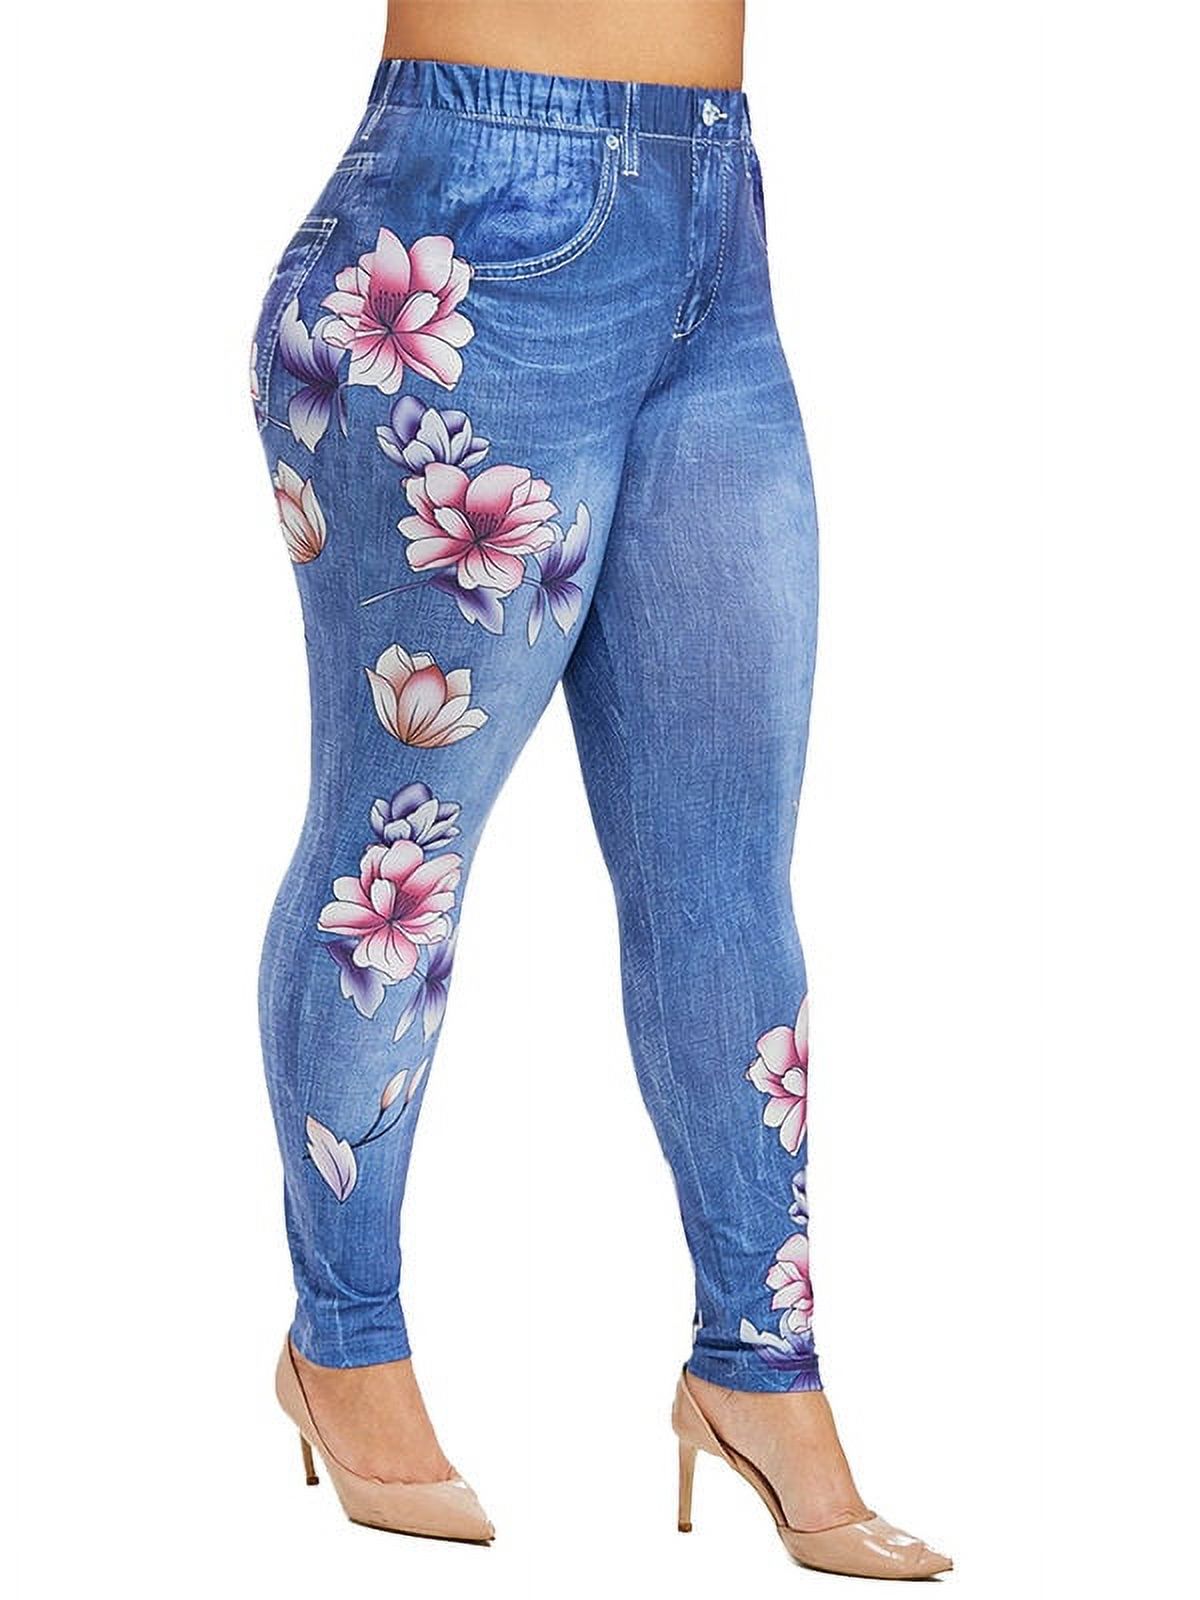 Julycc Women Casual 3D Denim Plus Size Floral Print Leggings - image 1 of 4